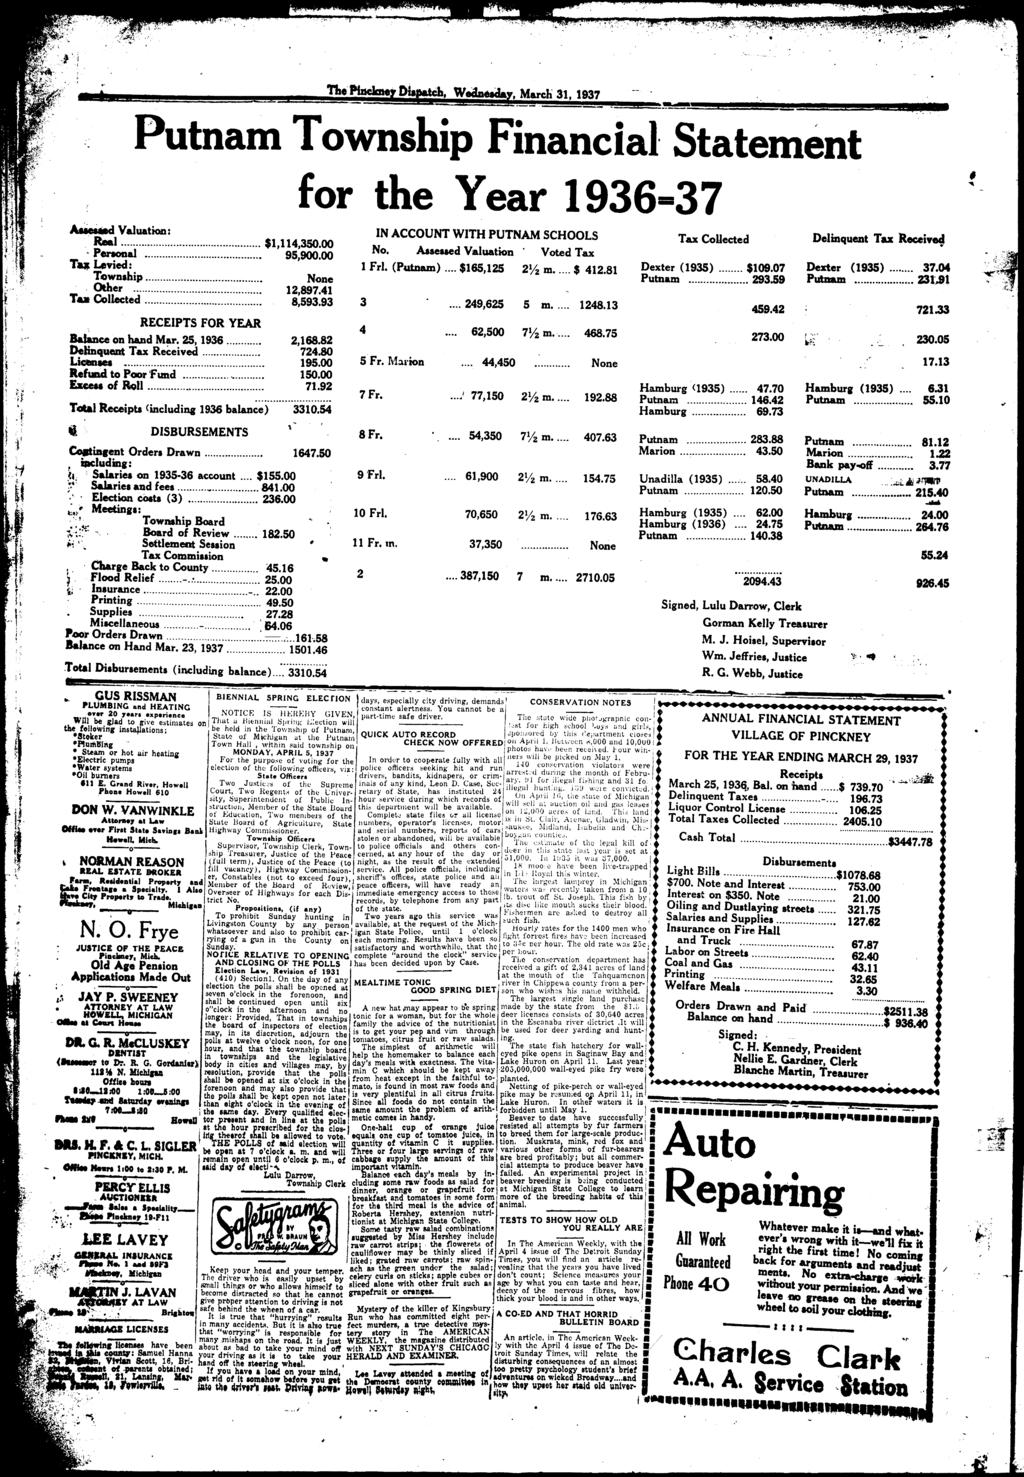 a*!w ytw Pjnj l..y',m» ;s? SSff Uyach, WeoWday, March 31, 1937 Punam Townshp Fnancal Saemen for he Year 1936-37 0 Aesed aluaon: Real $1,114,350.00 - Personal 95,900.